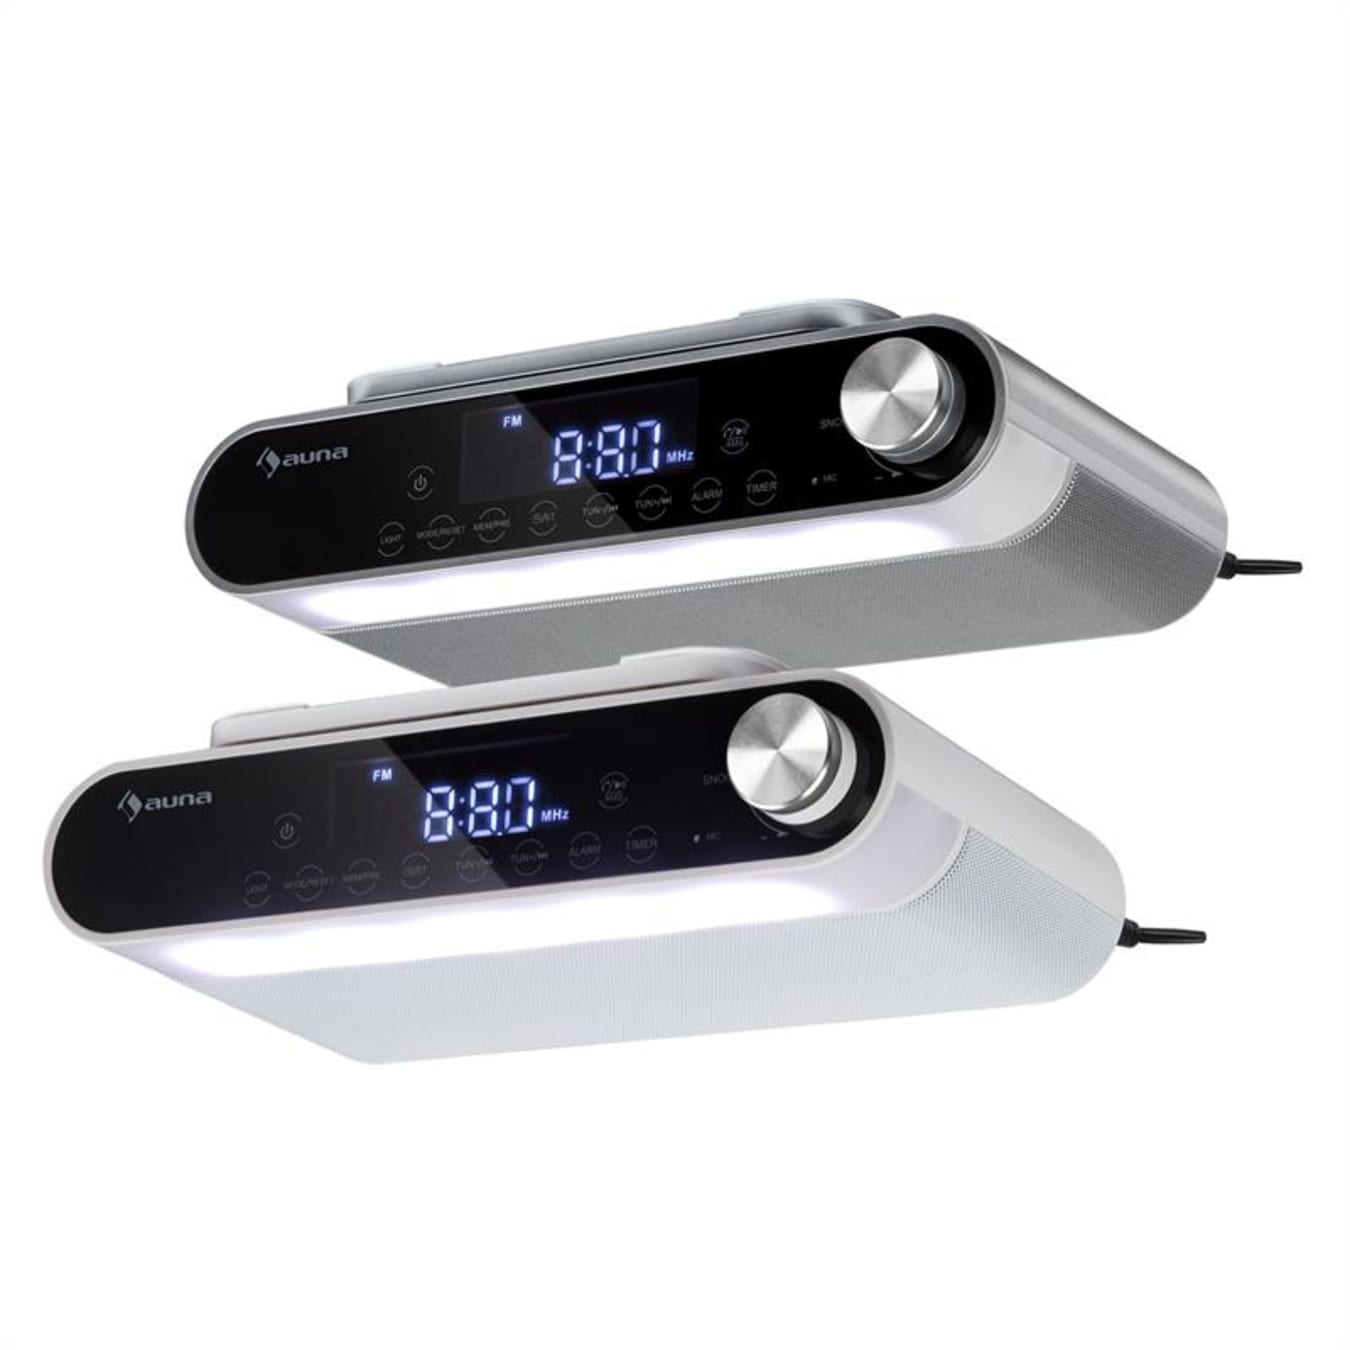 KR-130 Bluetooth radio de cocina función manos libres FM luz LED plata  Plata Metálica